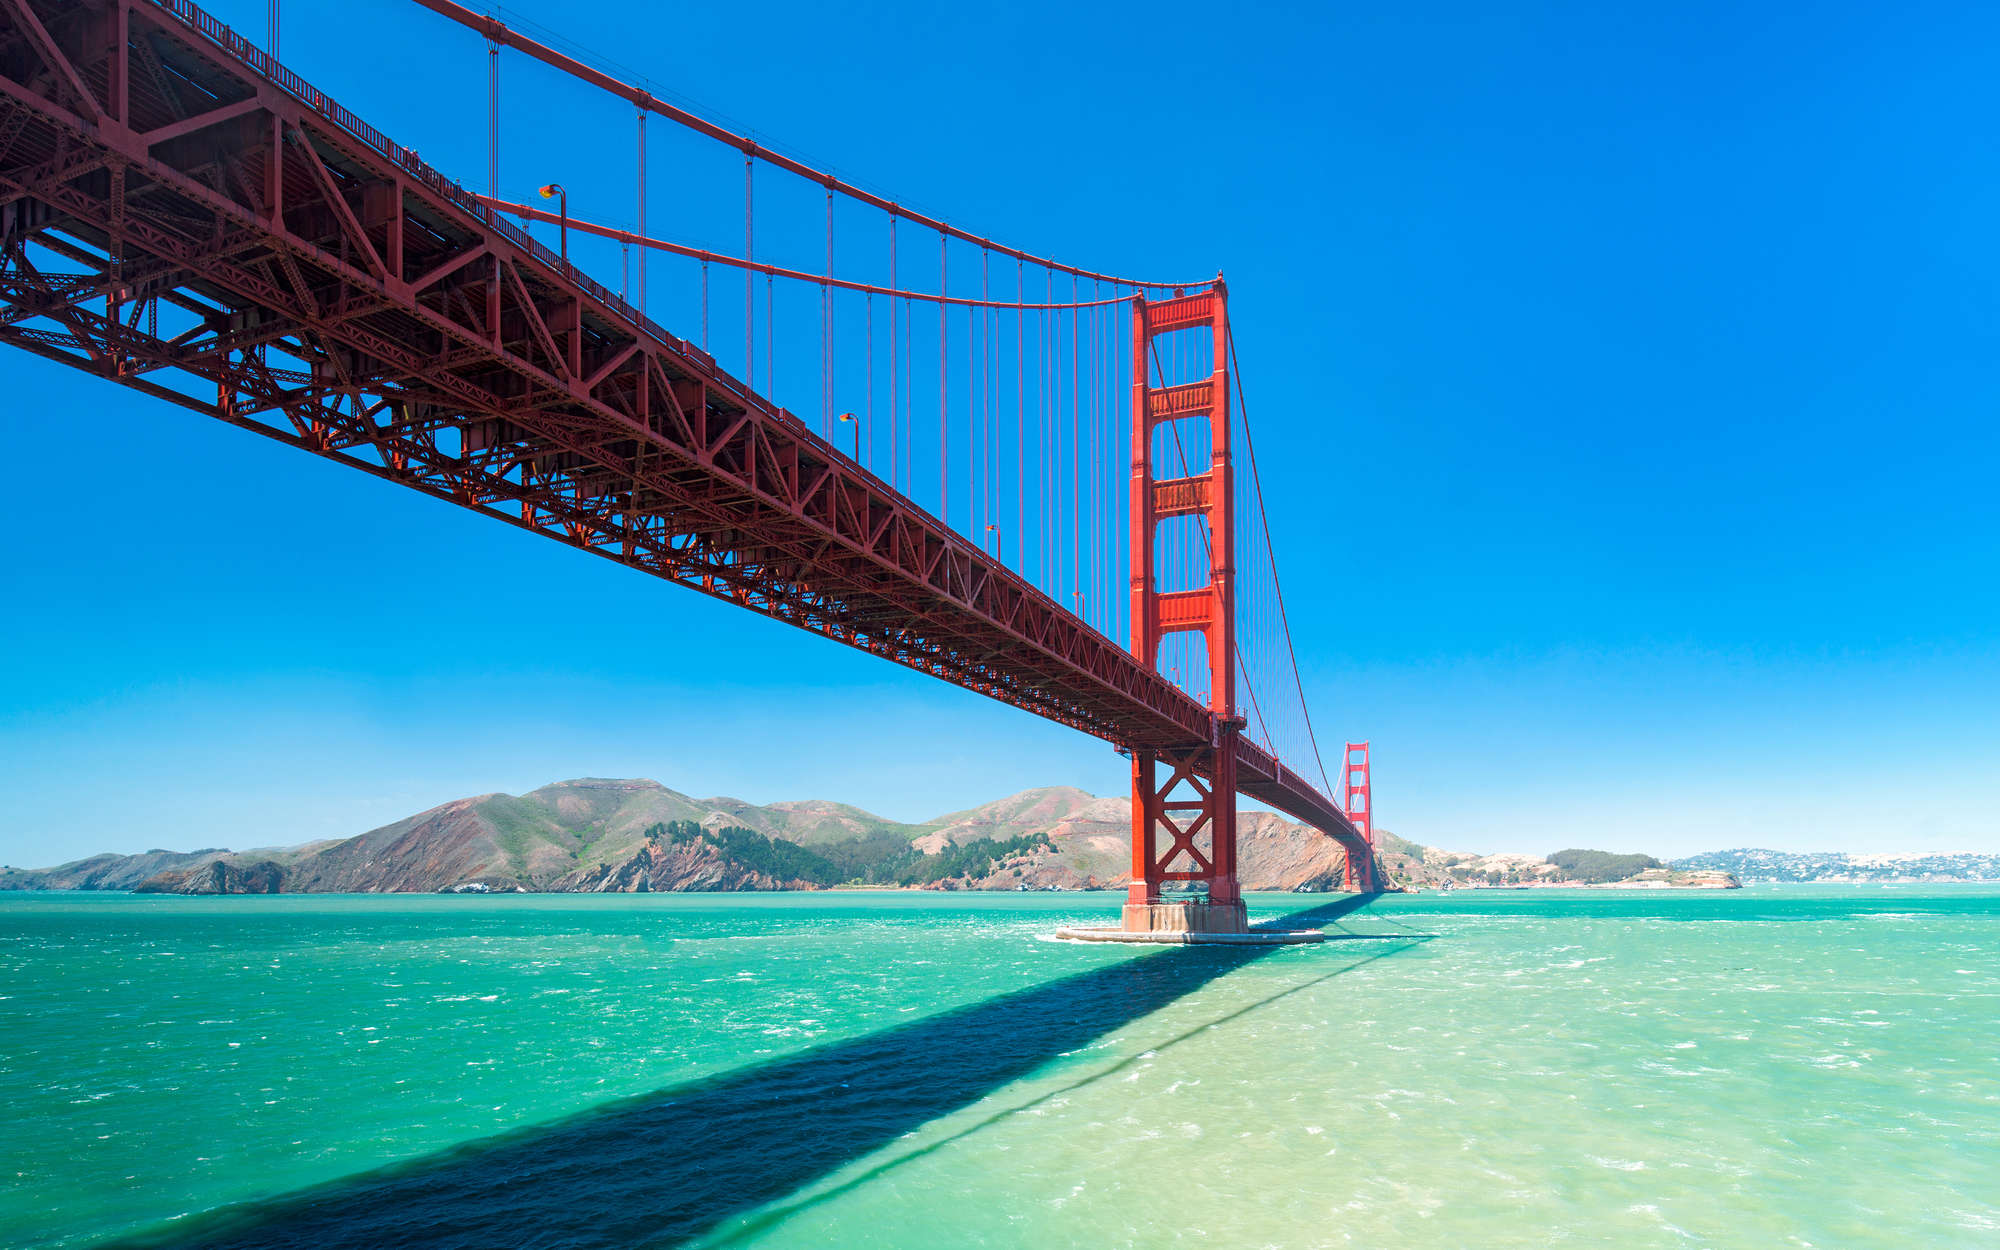             Fotomurali sul ponte Golden Gate di San Francisco - Materiali non tessuto liscio opaco
        